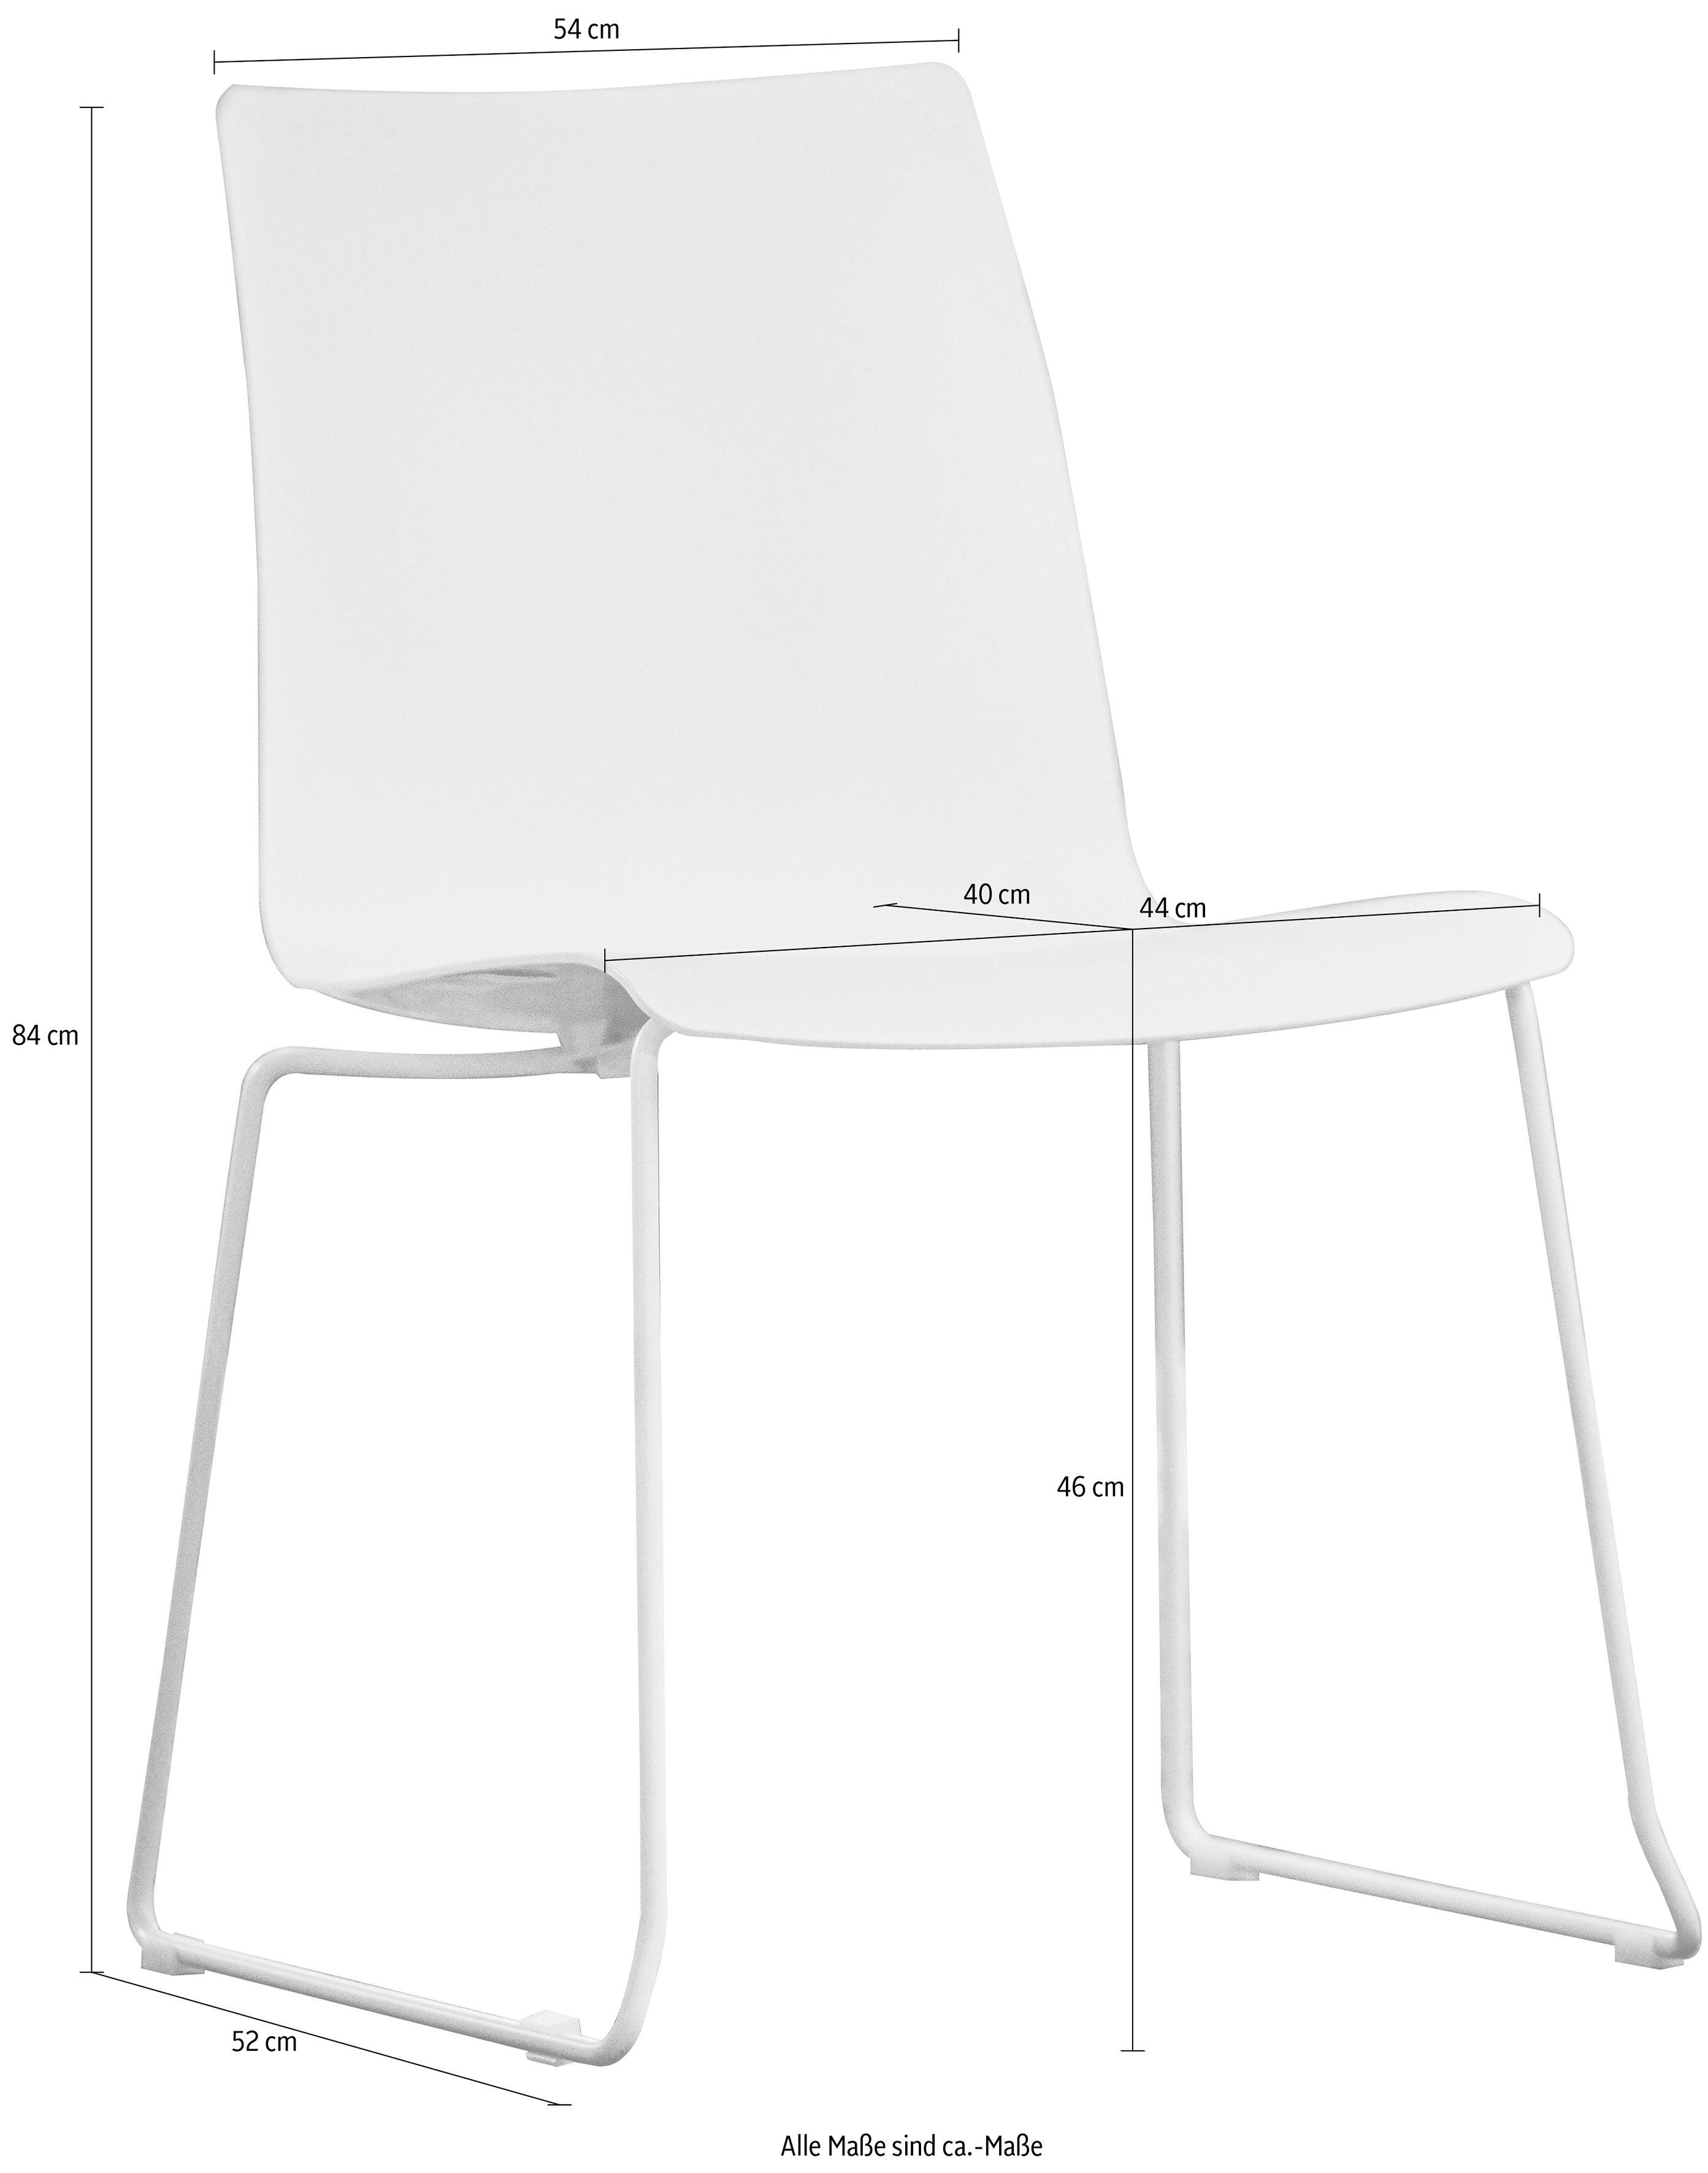 jankurtz Stuhl slide, Sitzschale aus Kunsstoff, stapelbar, in 3 Farben